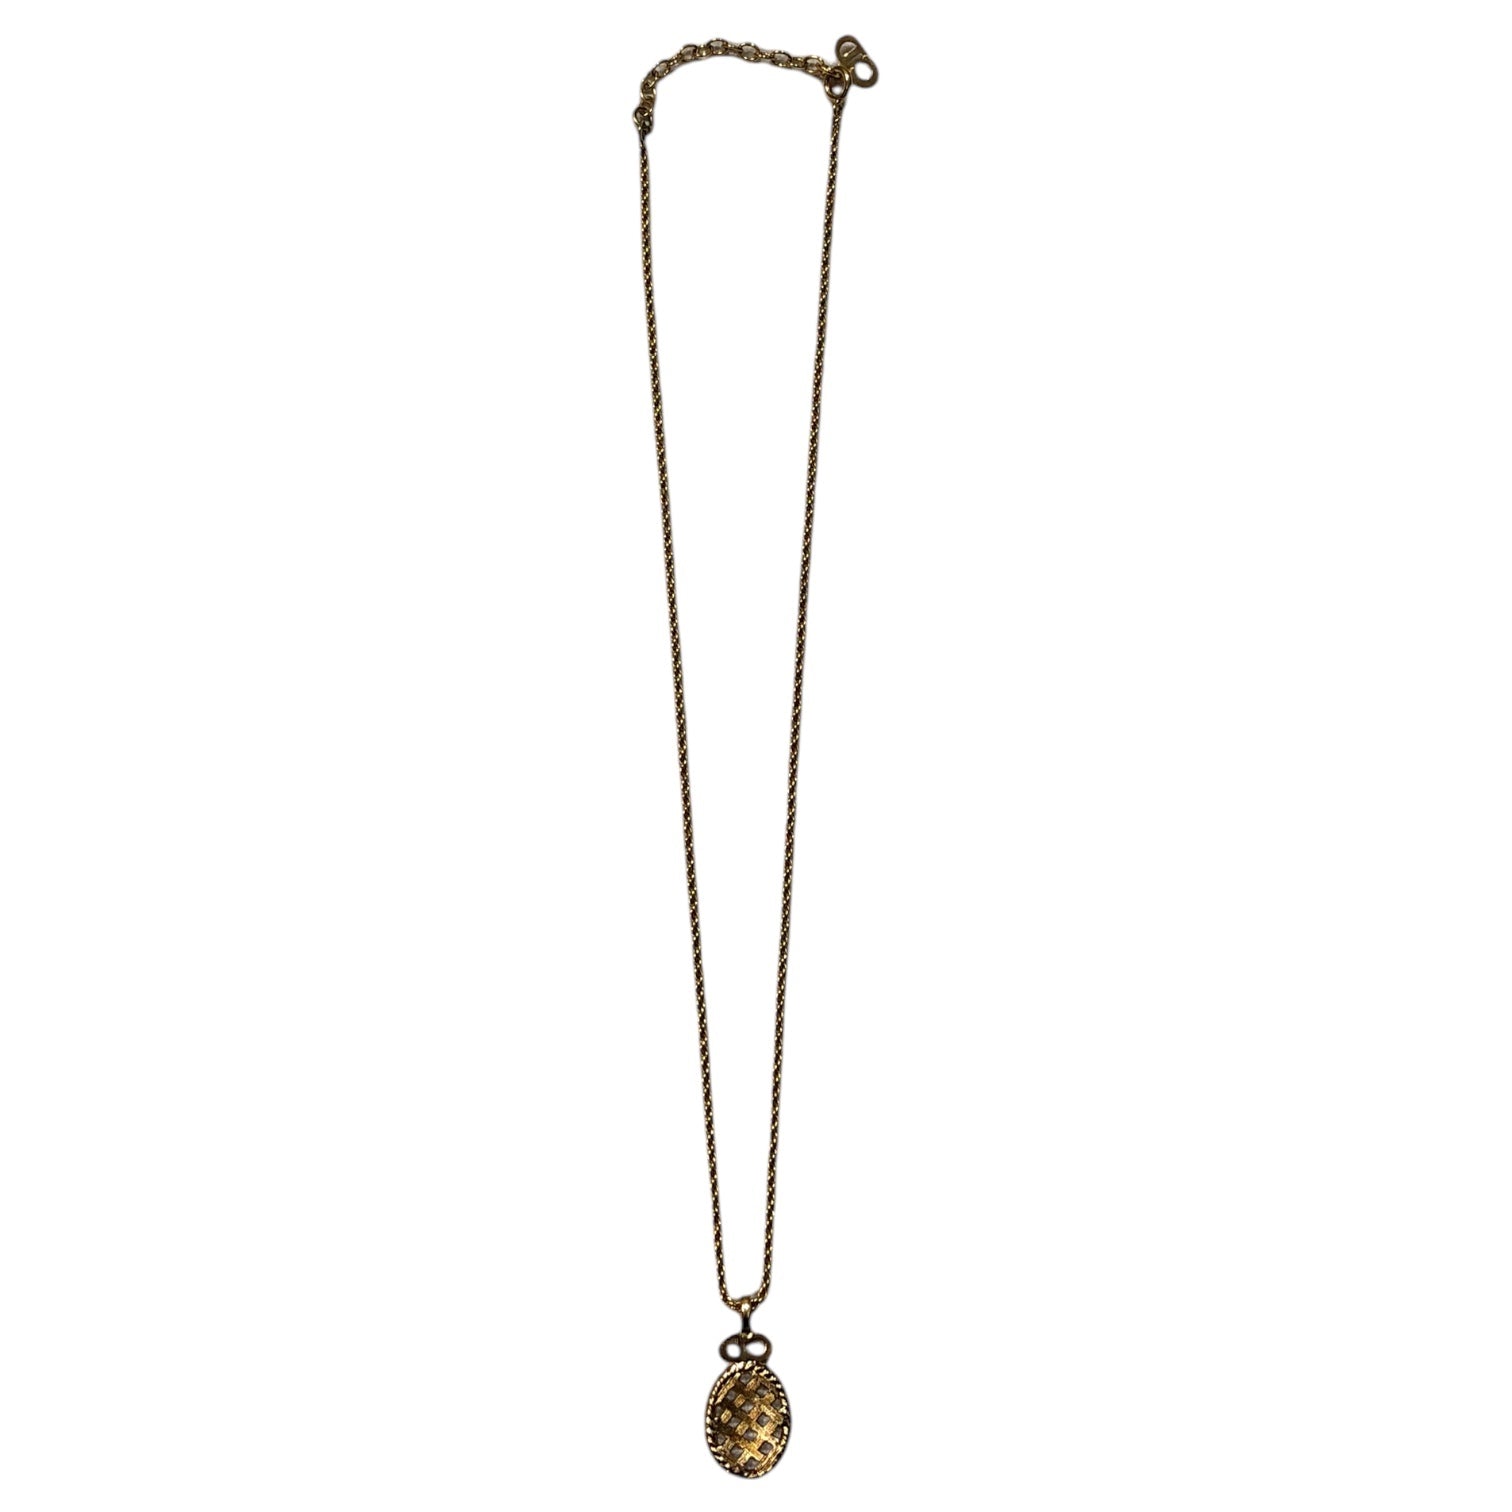 Christian Dior(クリスチャンディオール) "CD" logo  intrecciato design pendant necklace ロゴ デザイン ペンダント ネックレス ゴールド OLD DIOR ヴィンテージ